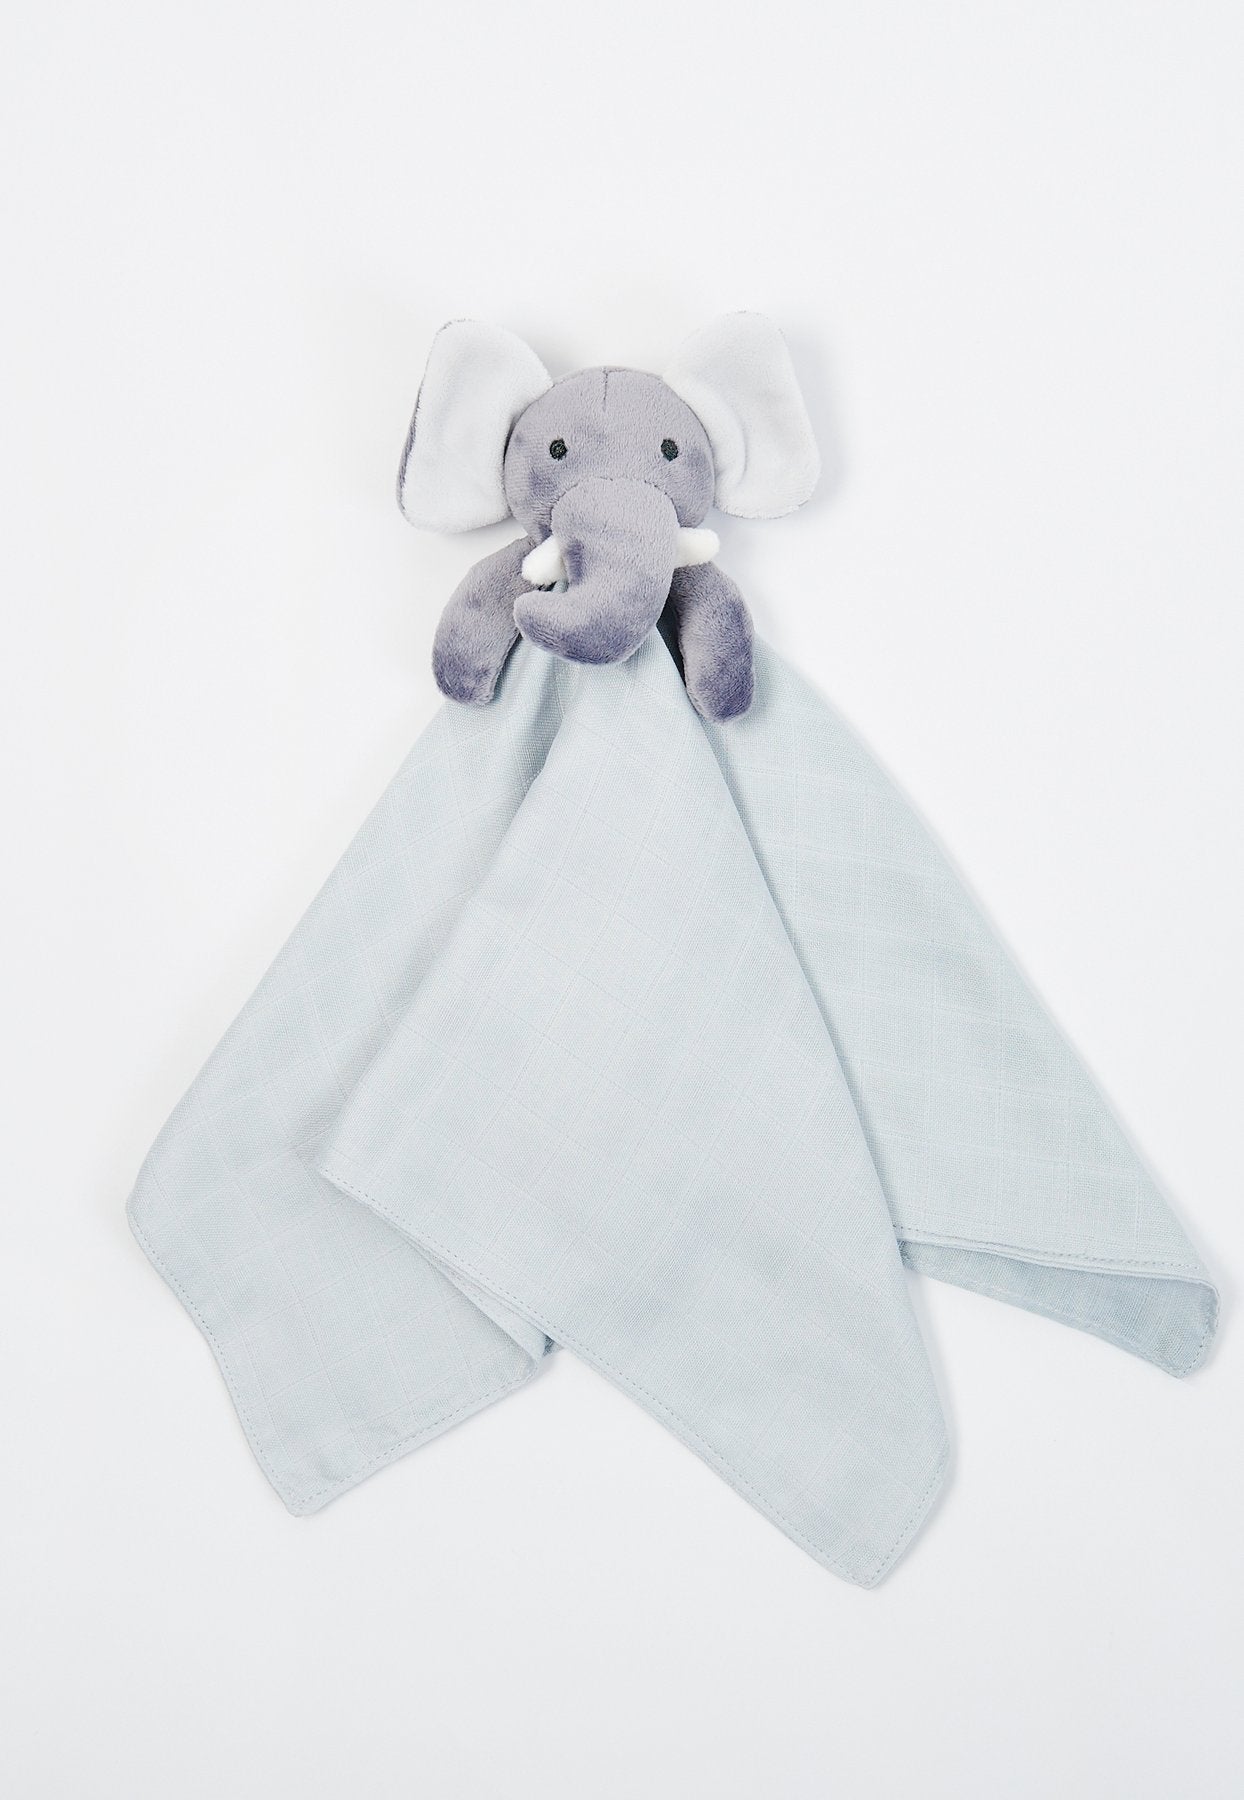 Little Bamboo Lovie/Comforter - Erin the Elephant